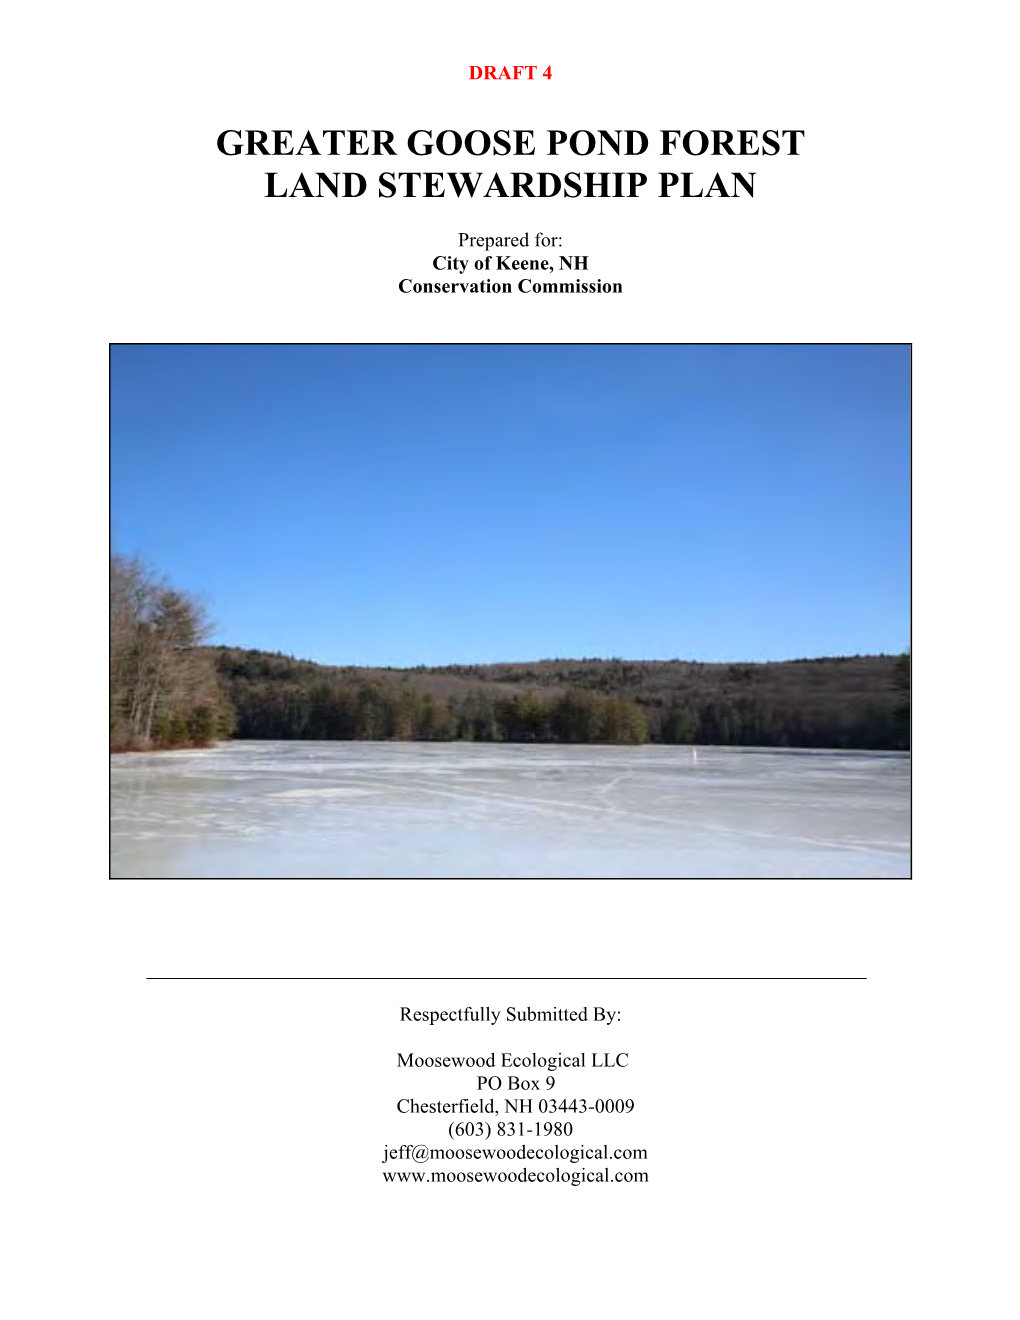 Greater Goose Pond Forest Land Stewardship Plan